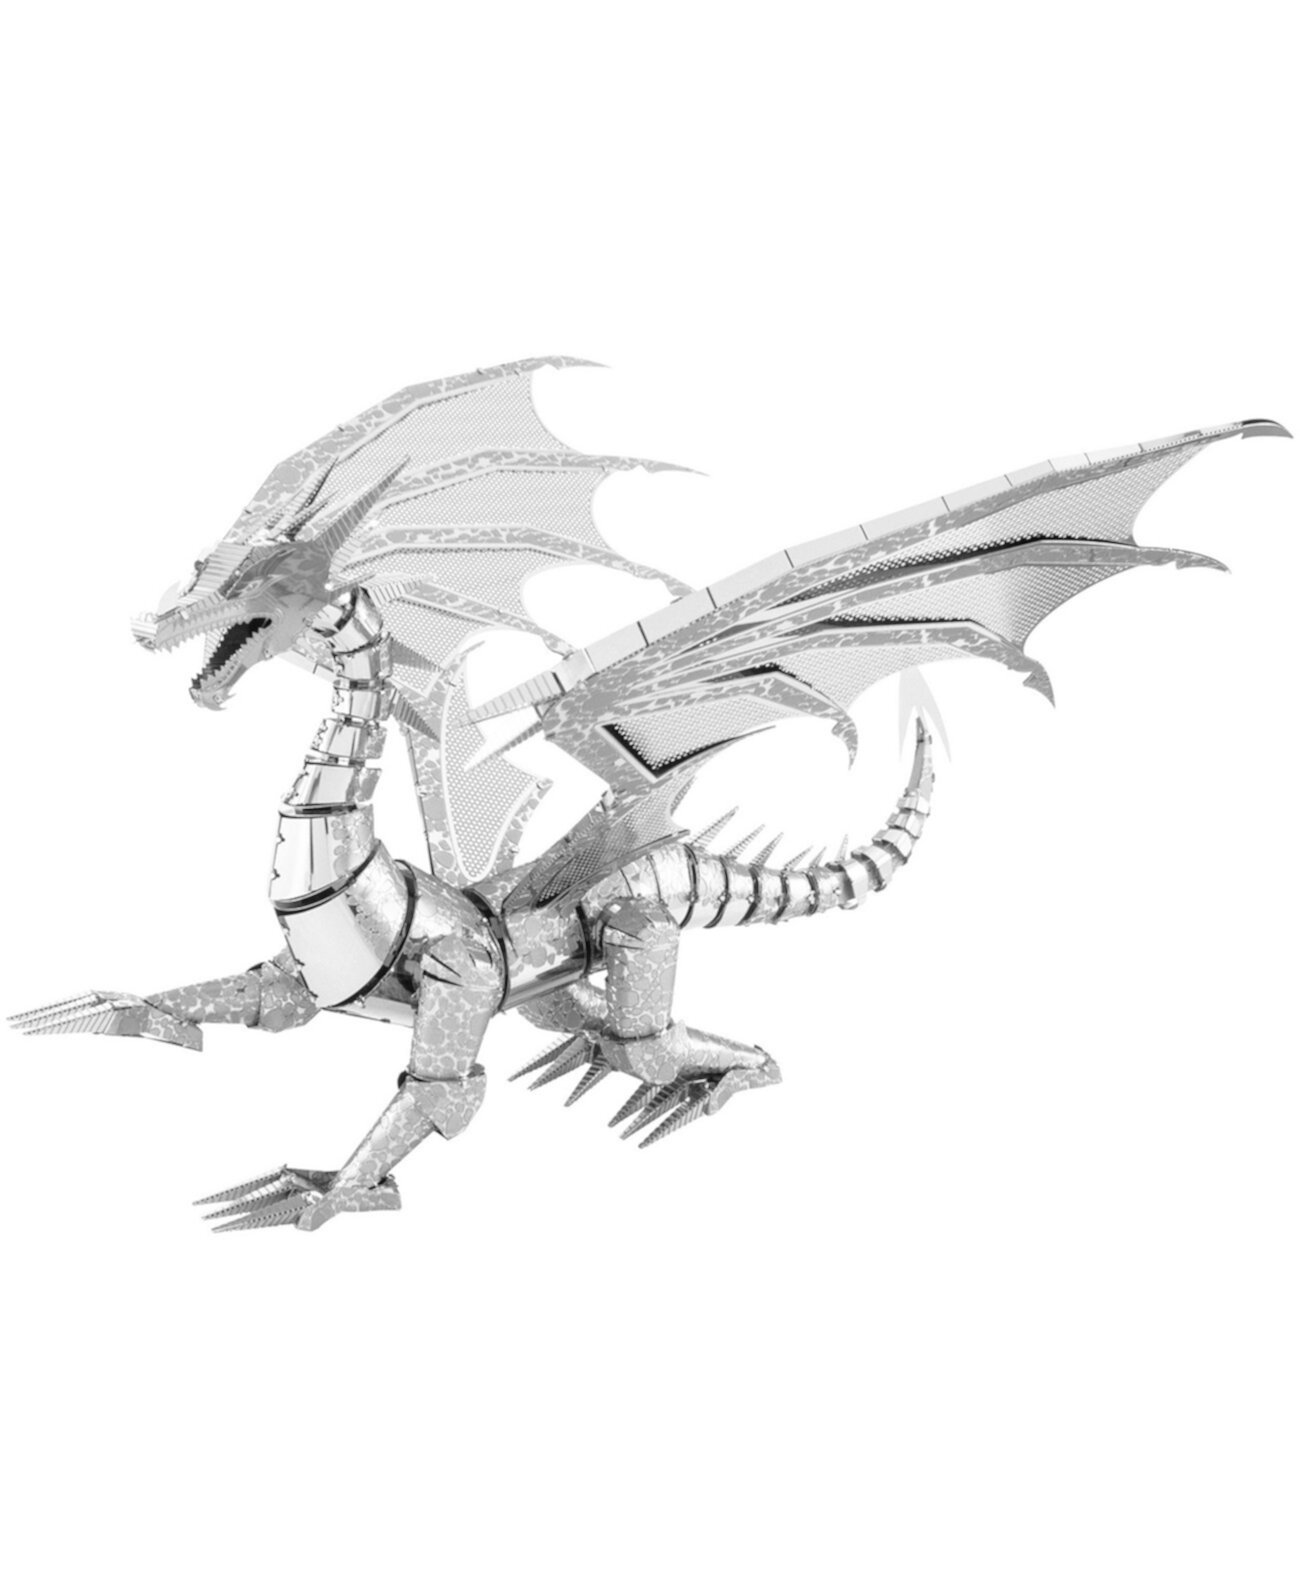 ICONX 3D Metal Model Kit - Серебряный дракон Fascinations